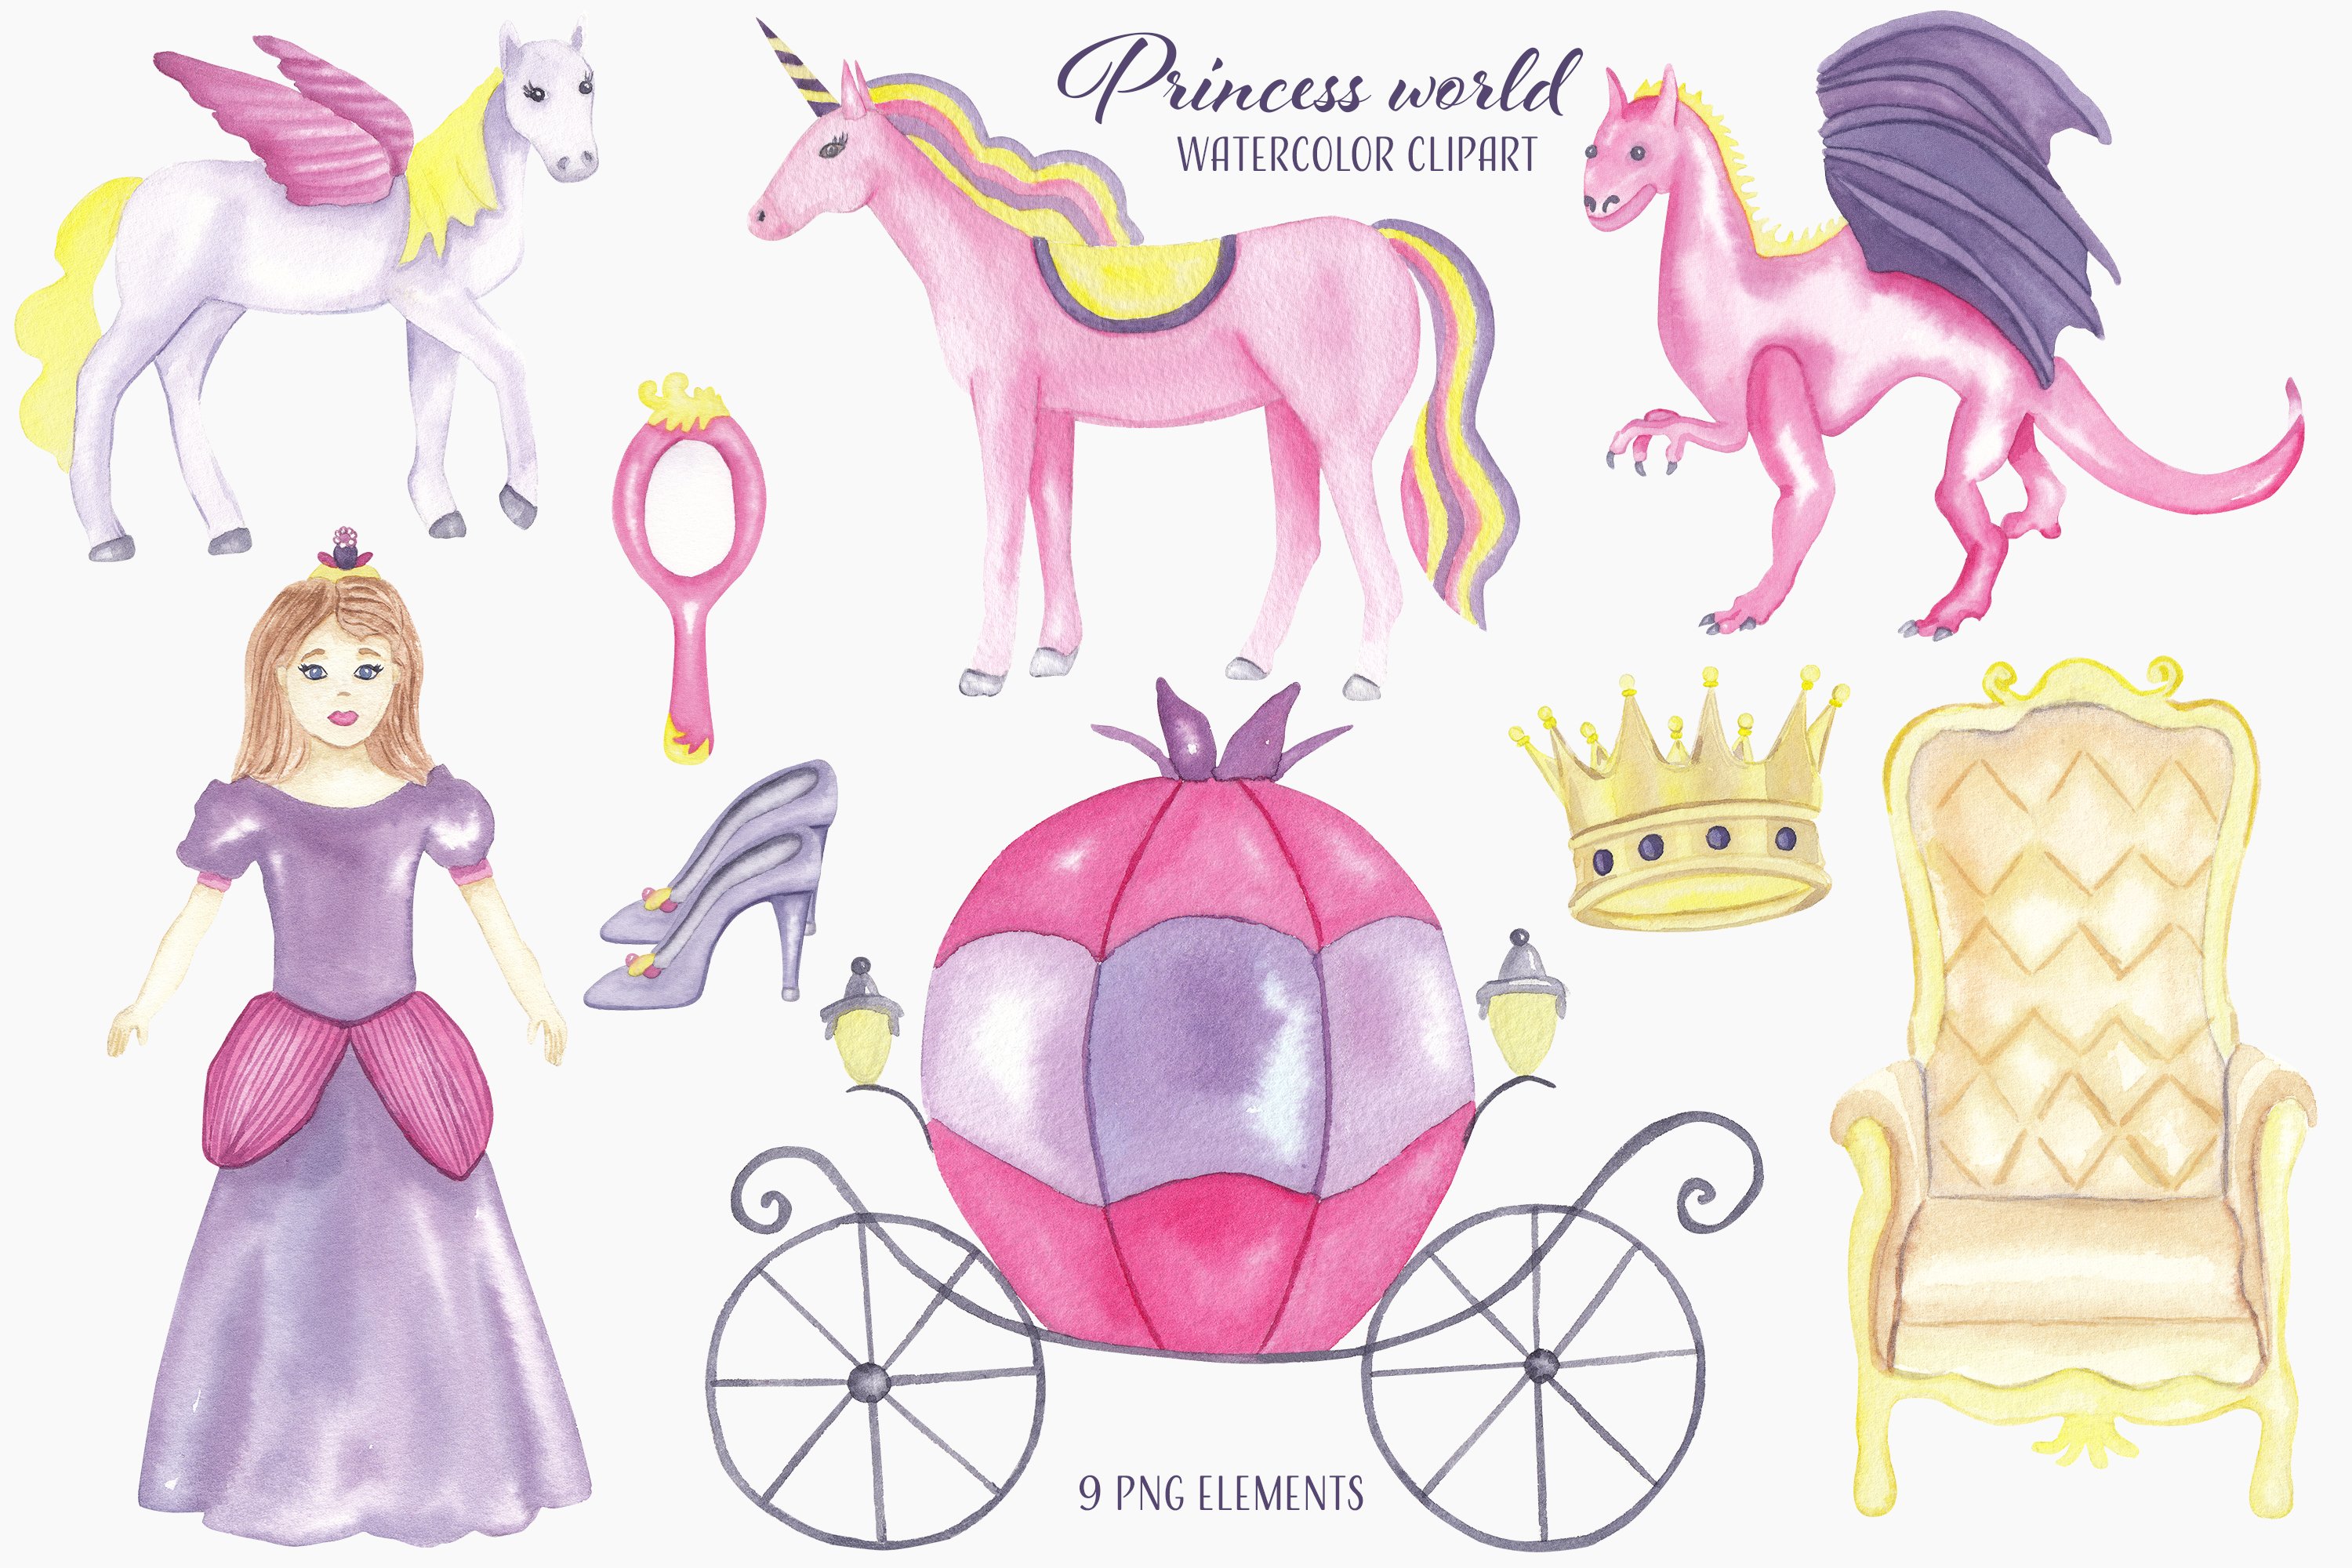 Princess world - watercolor set cover image.